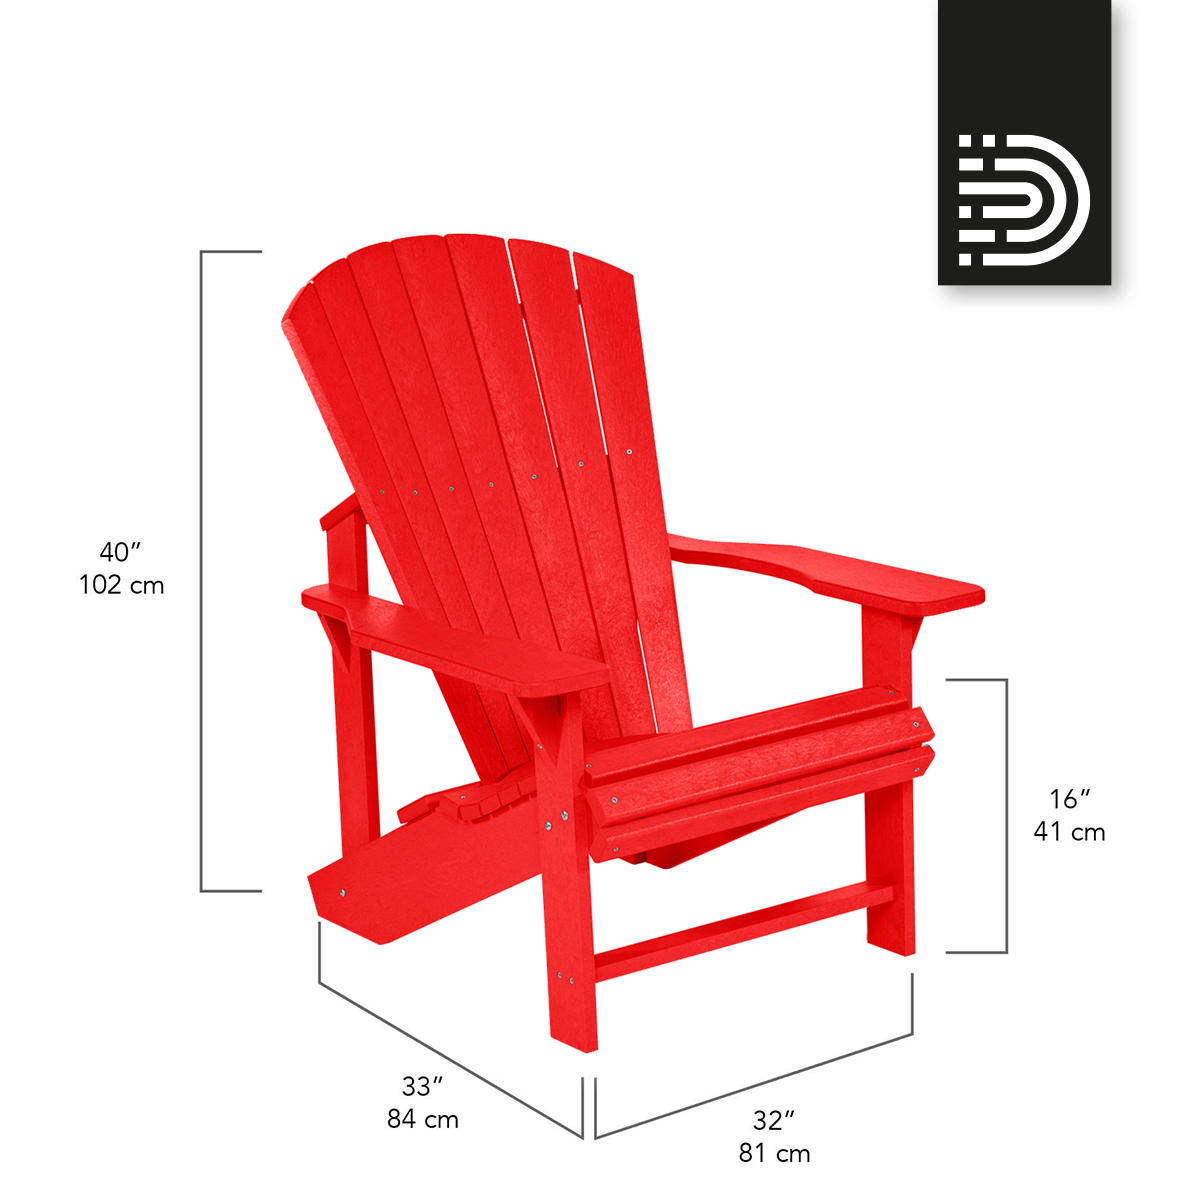  C01 Classic Adirondack Chair - red 01